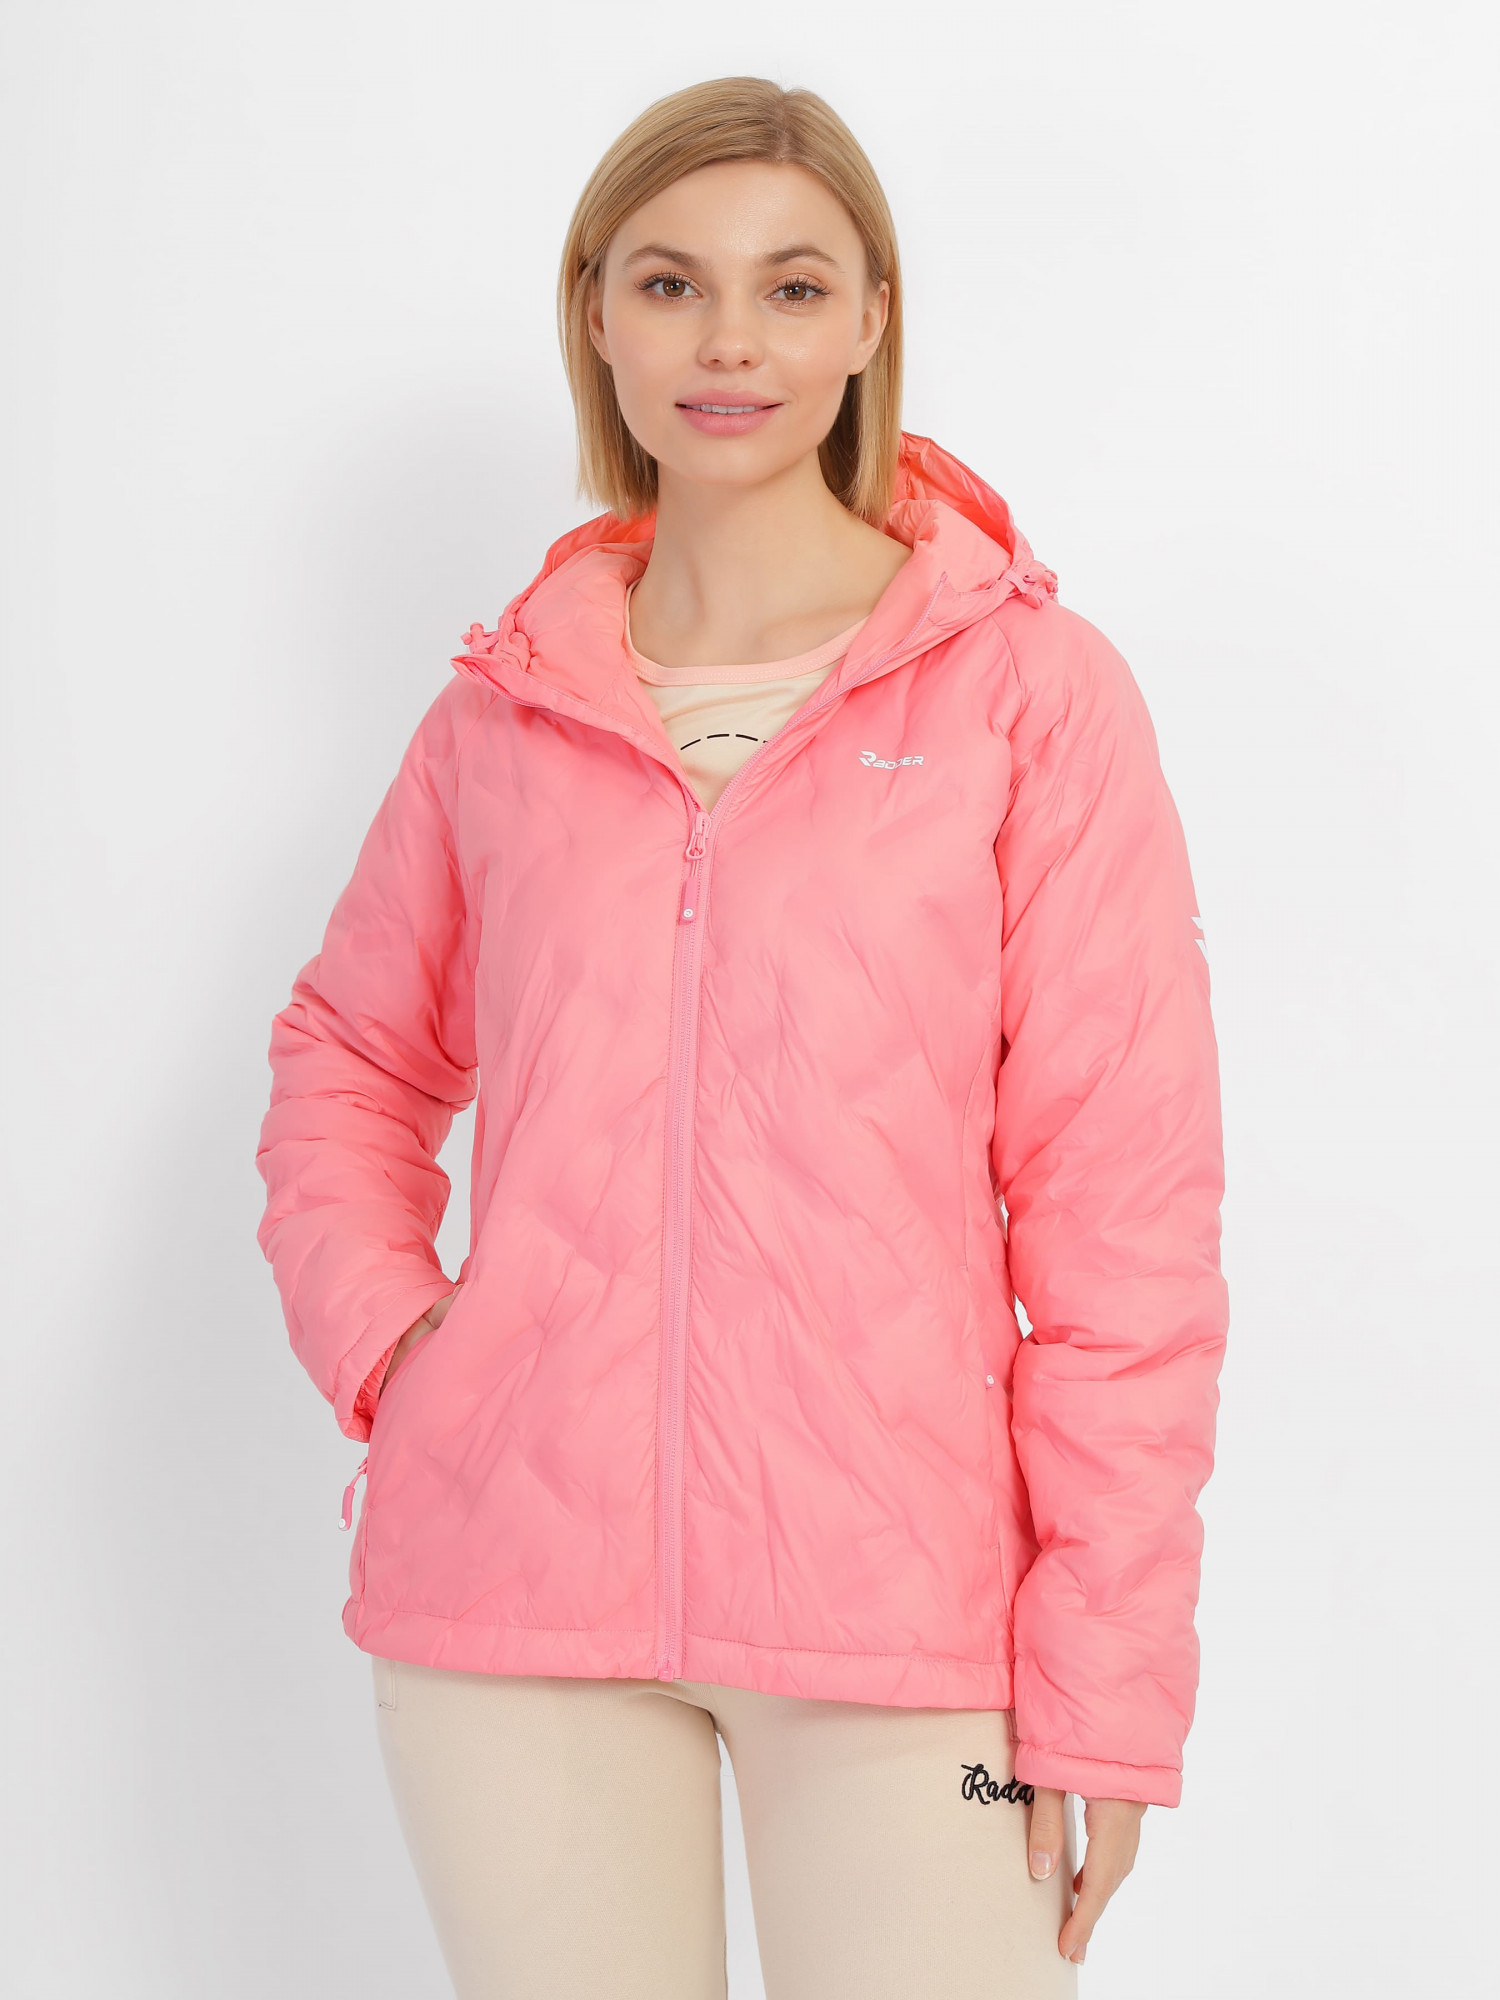 Куртка жіноча Radder Ally рожева 123307-600 изображение 3